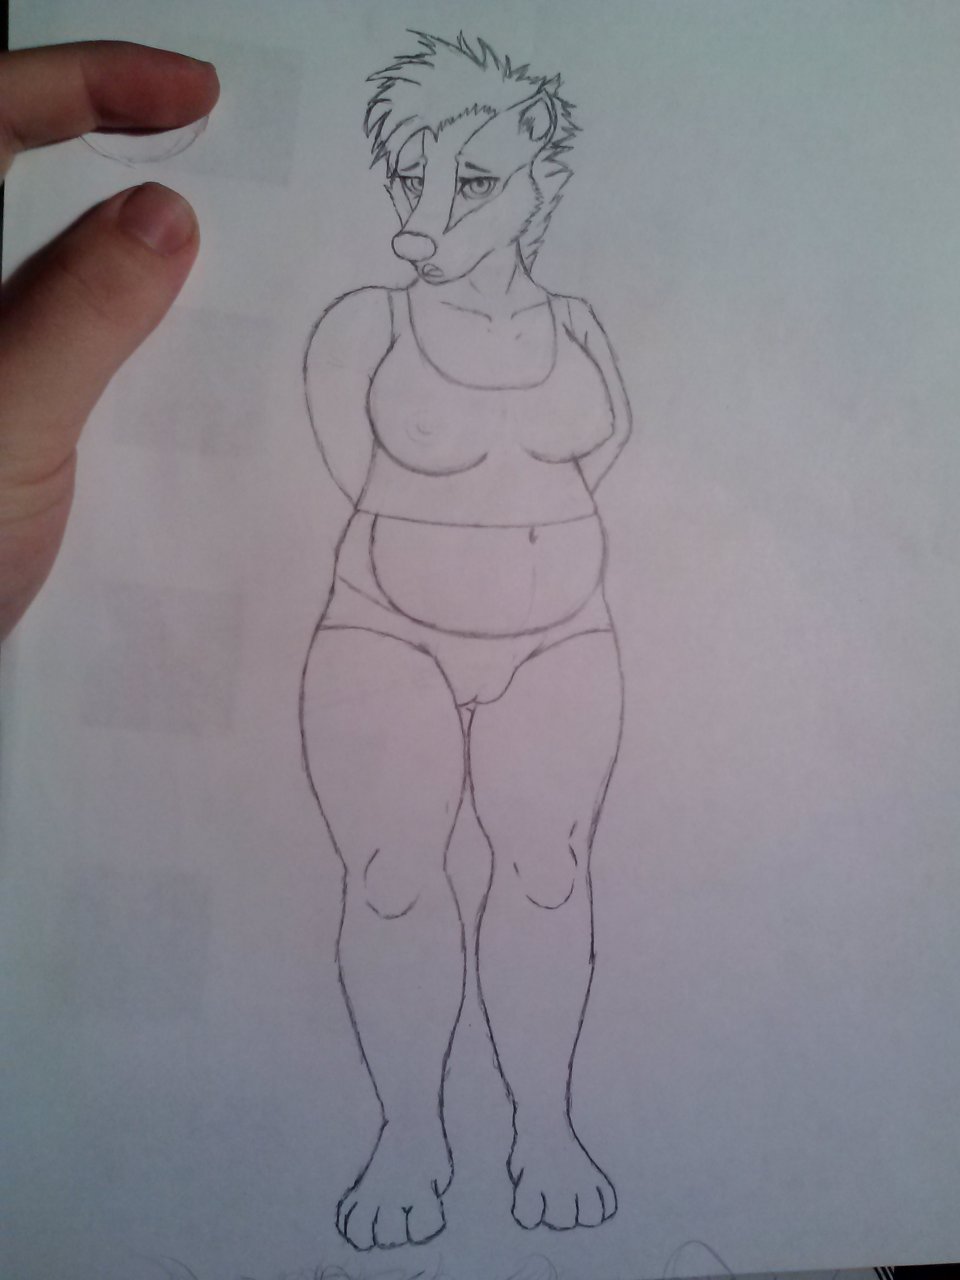 Tight Clothes (Sketch)